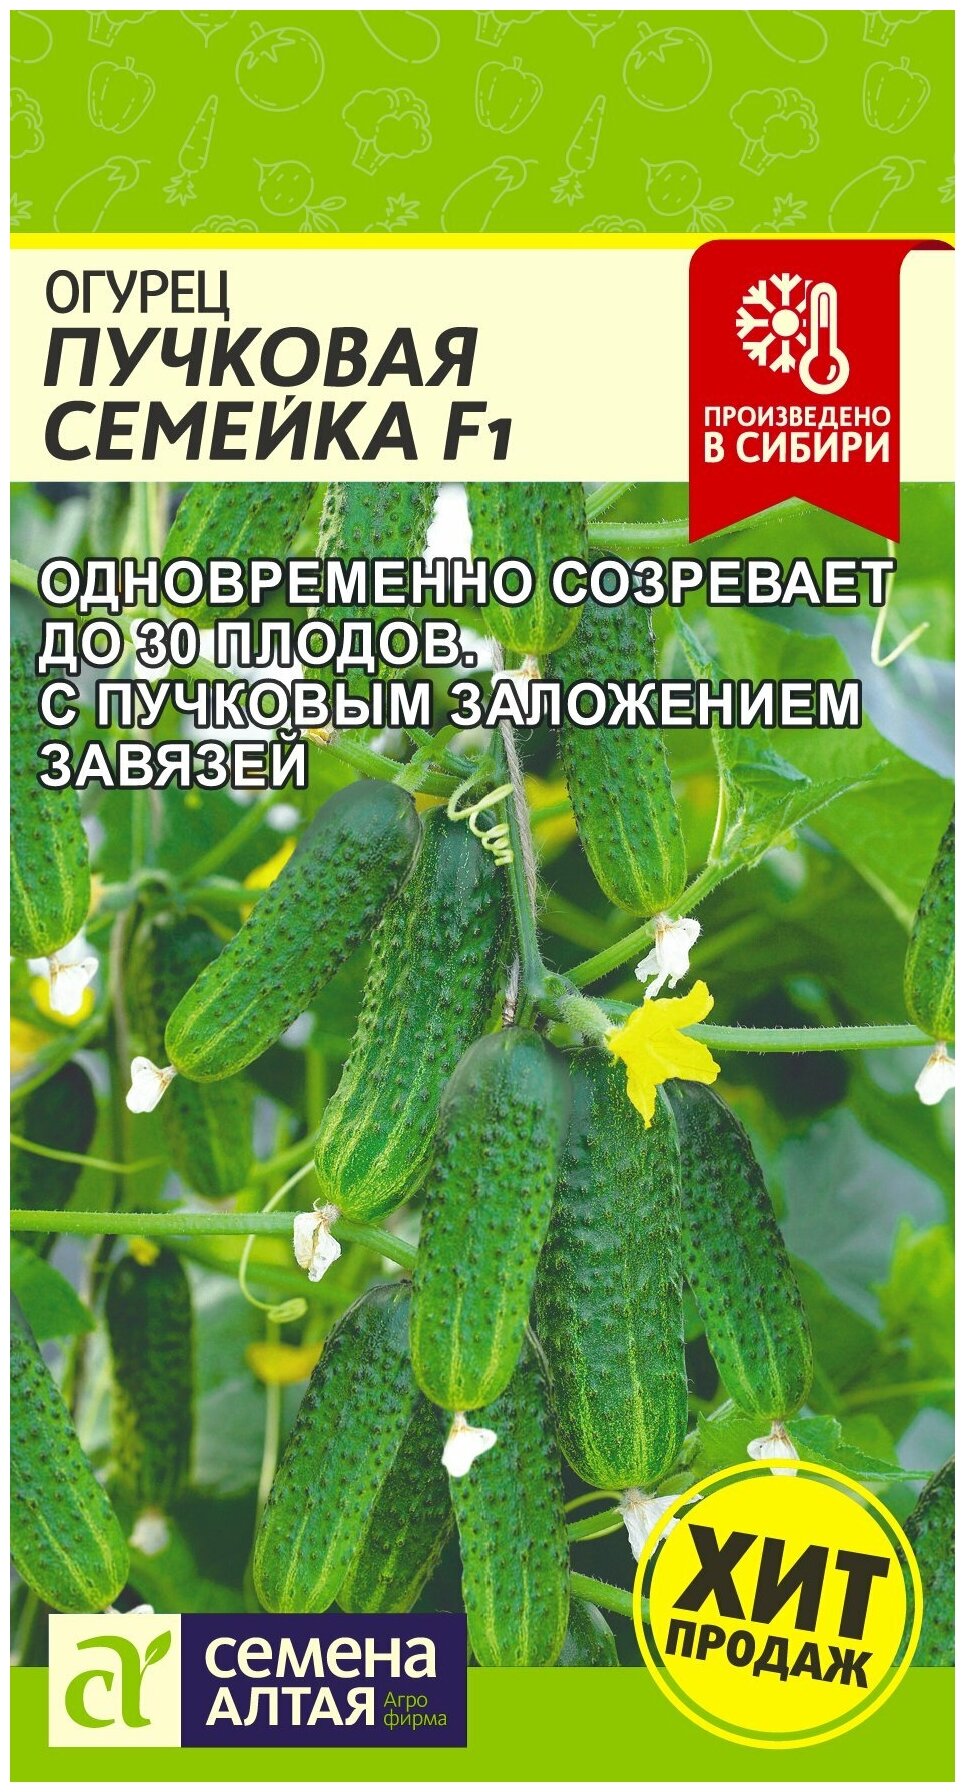 Семена Огурца "Пучковая семейка" F1 (6 семян)